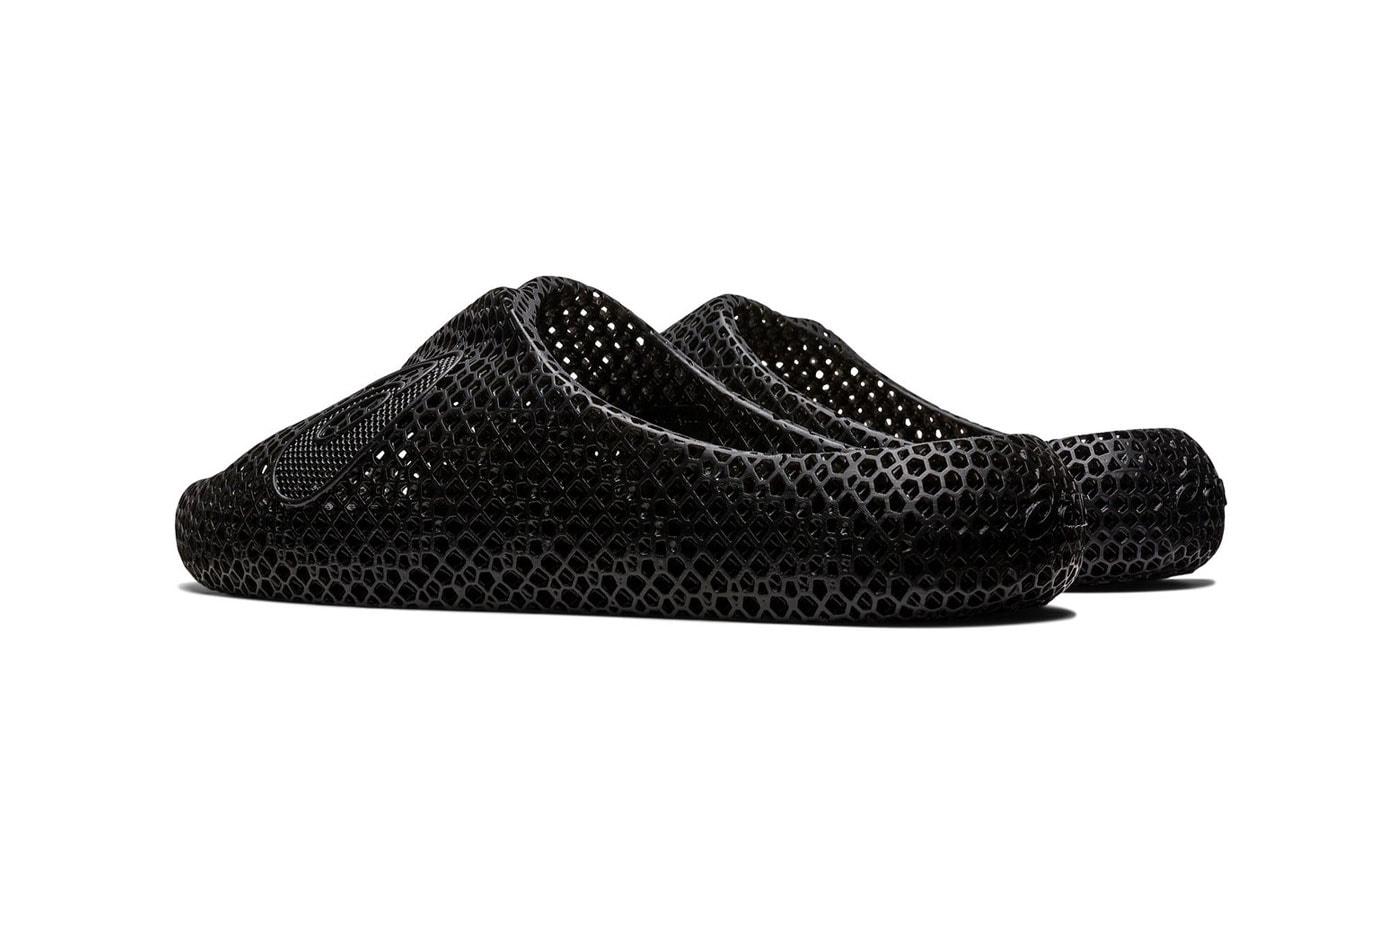 ASICS ACTIBREEZE 3D Printed Slides Sandals Images Release Info